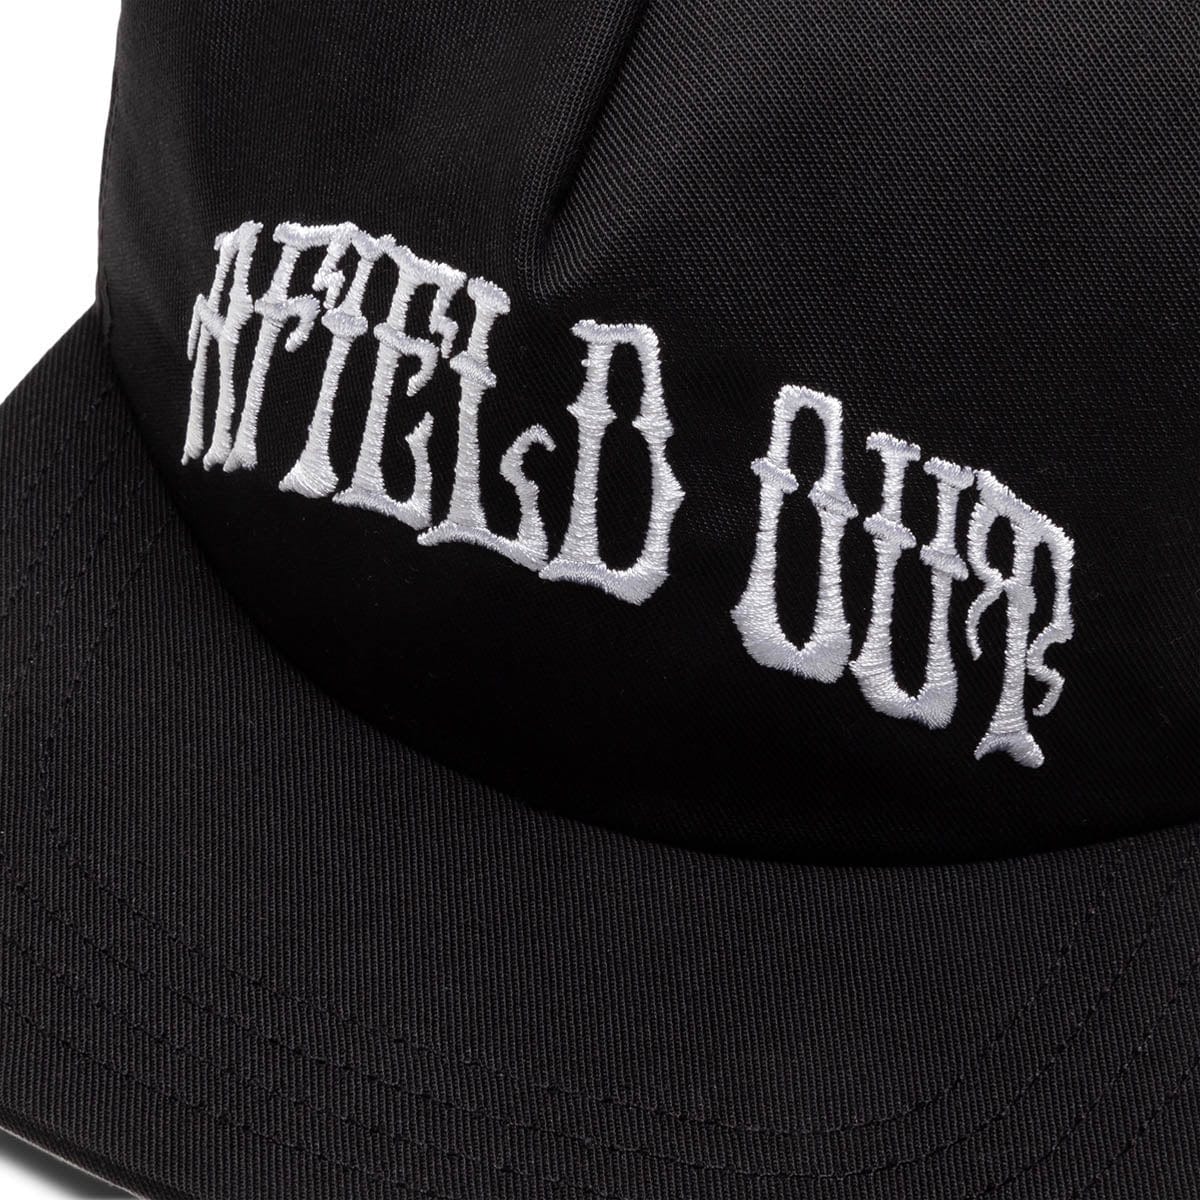 Afield Out Headwear BLACK / O/S AWAKE CAP